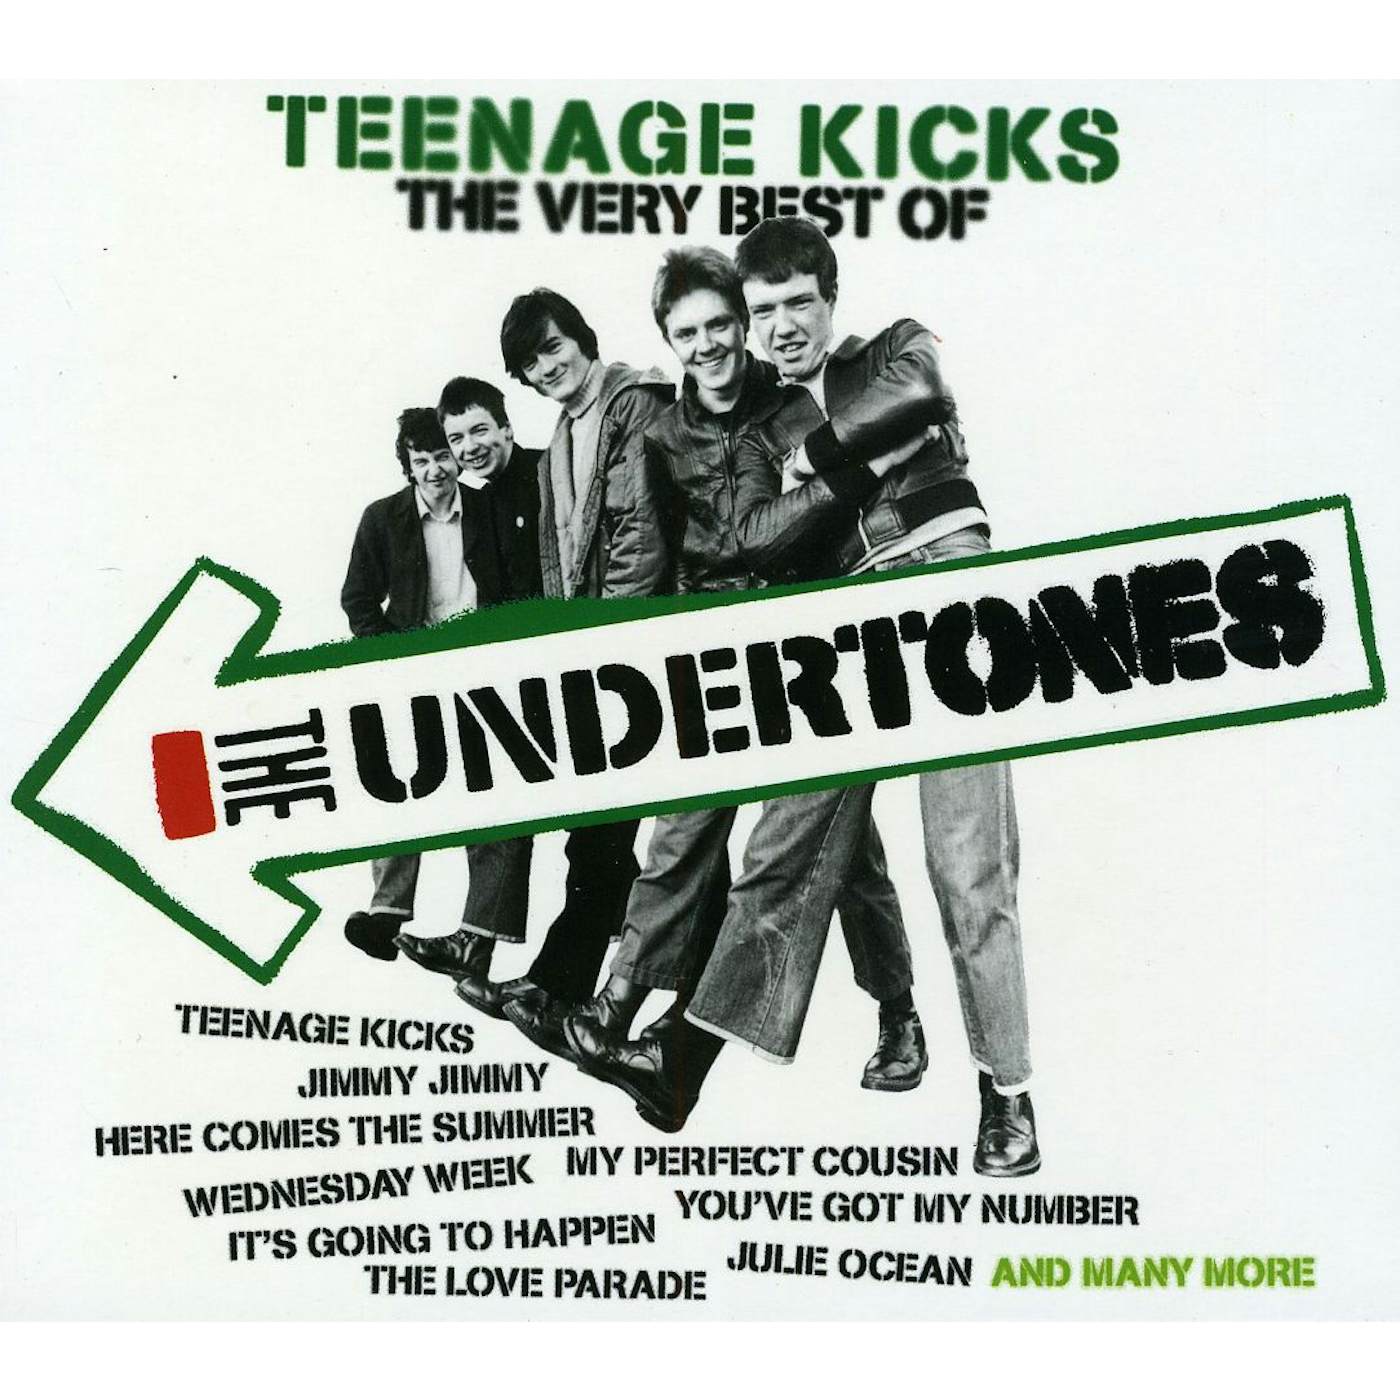 TEENAGE KICKS THE VERY BEST OF The Undertones CD